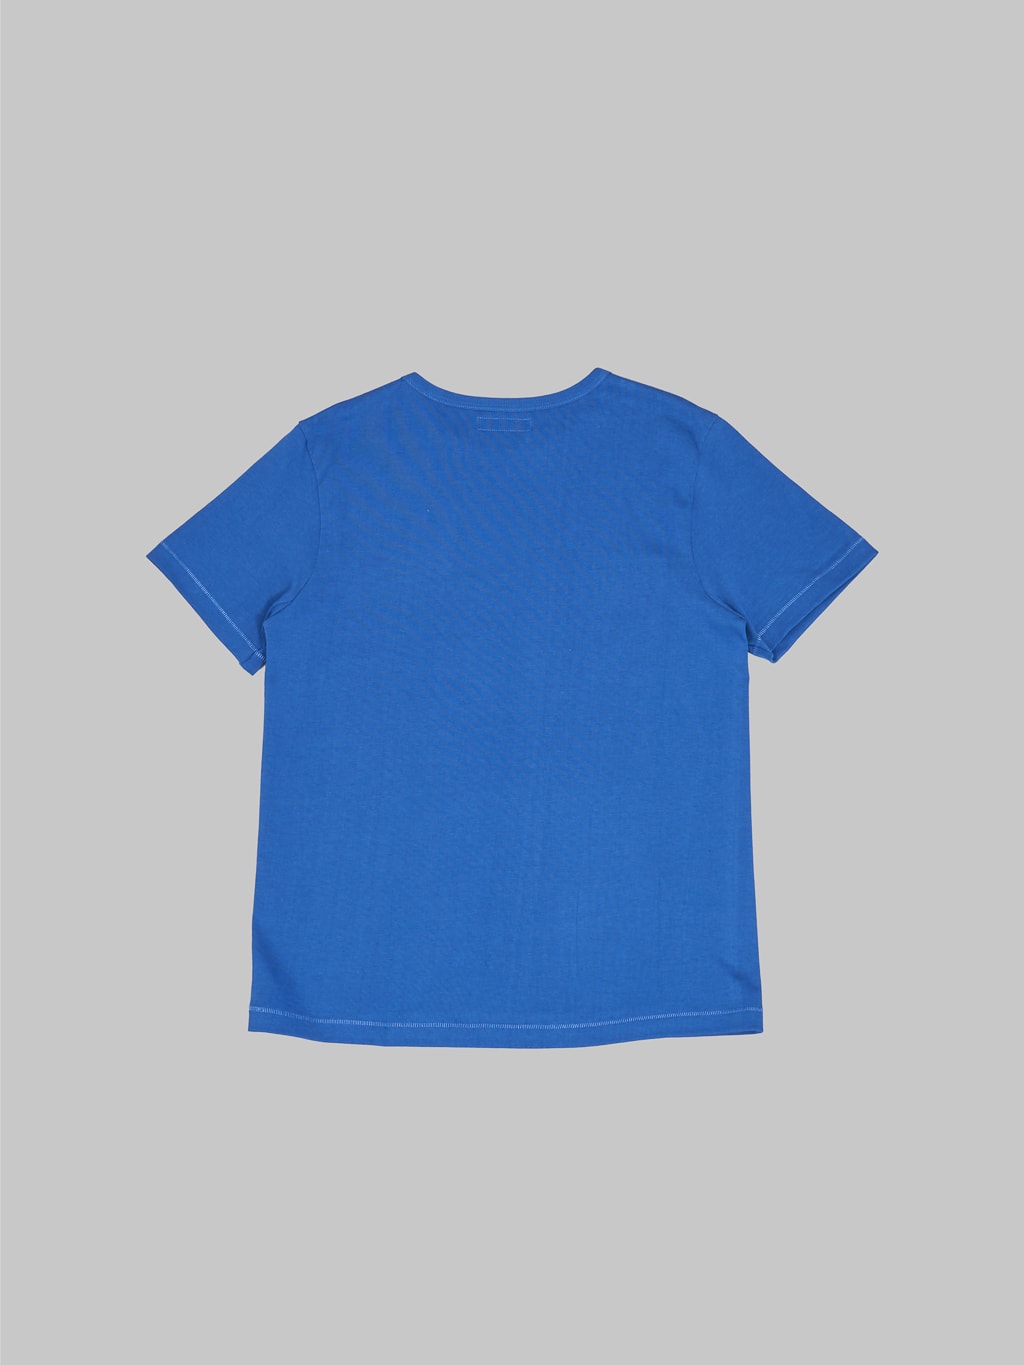 merz b schwanen 215 heavyweight loopwheeled tshirt vintage blue fabric